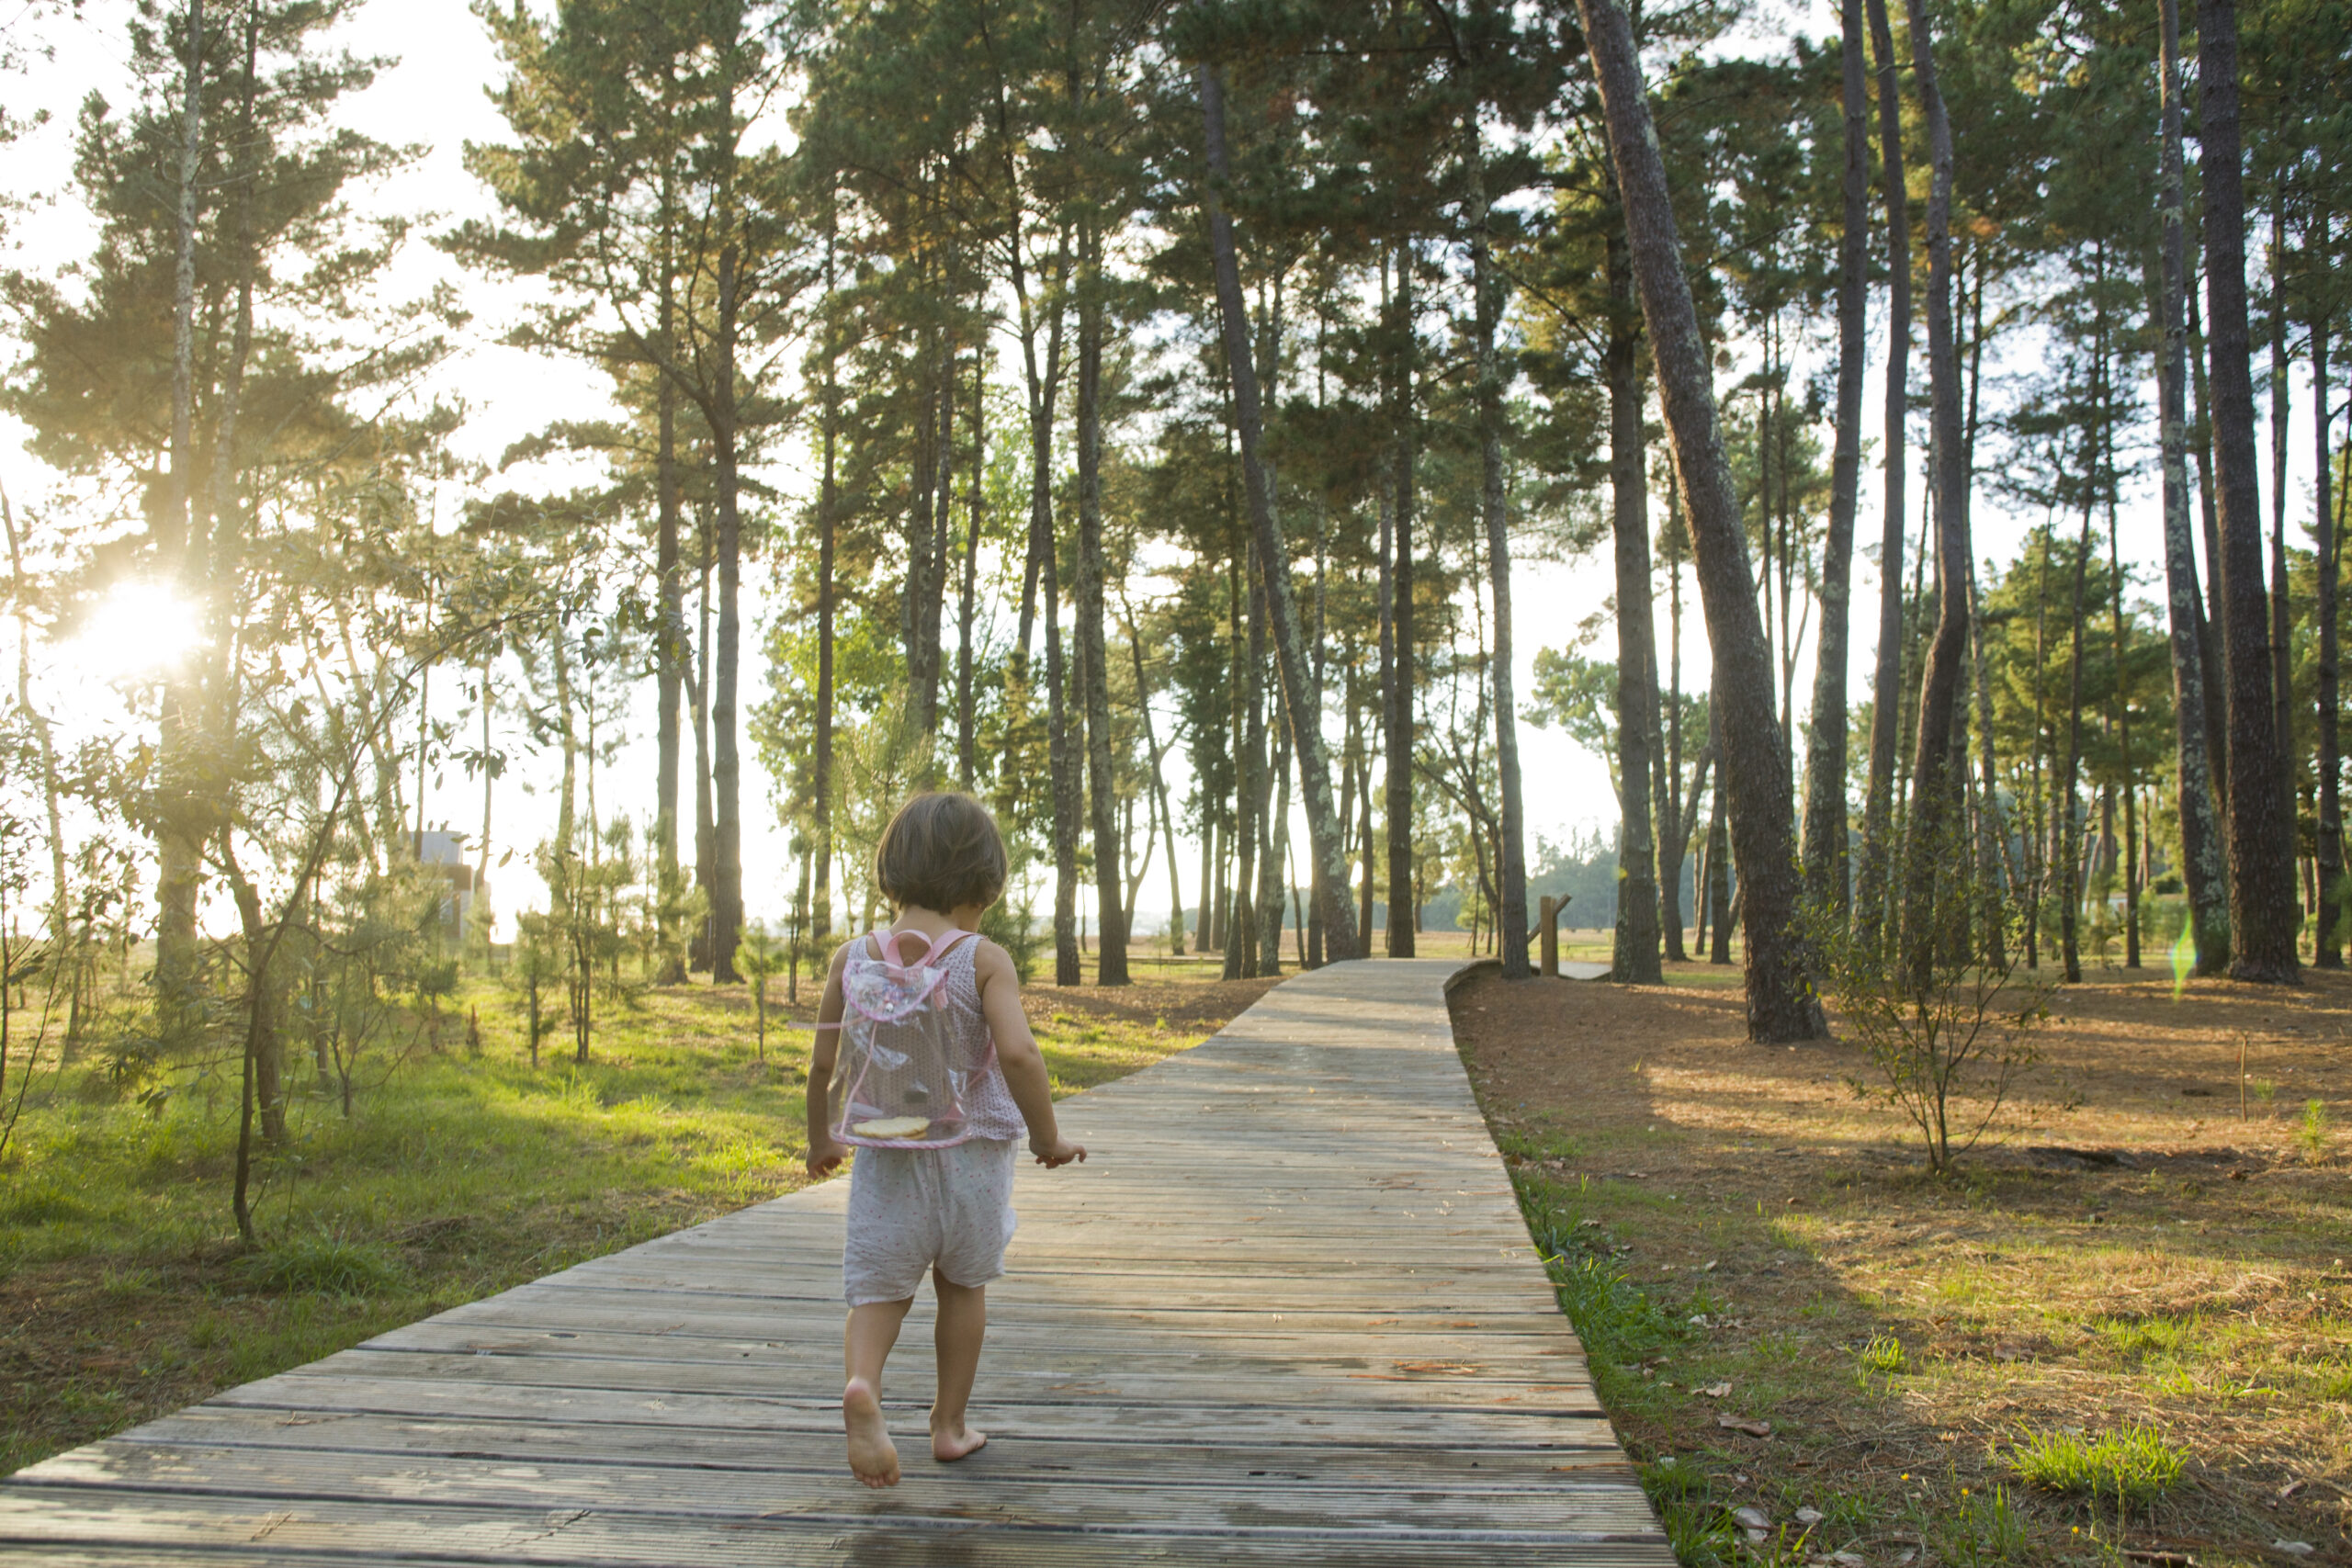 Child walking along wooden path